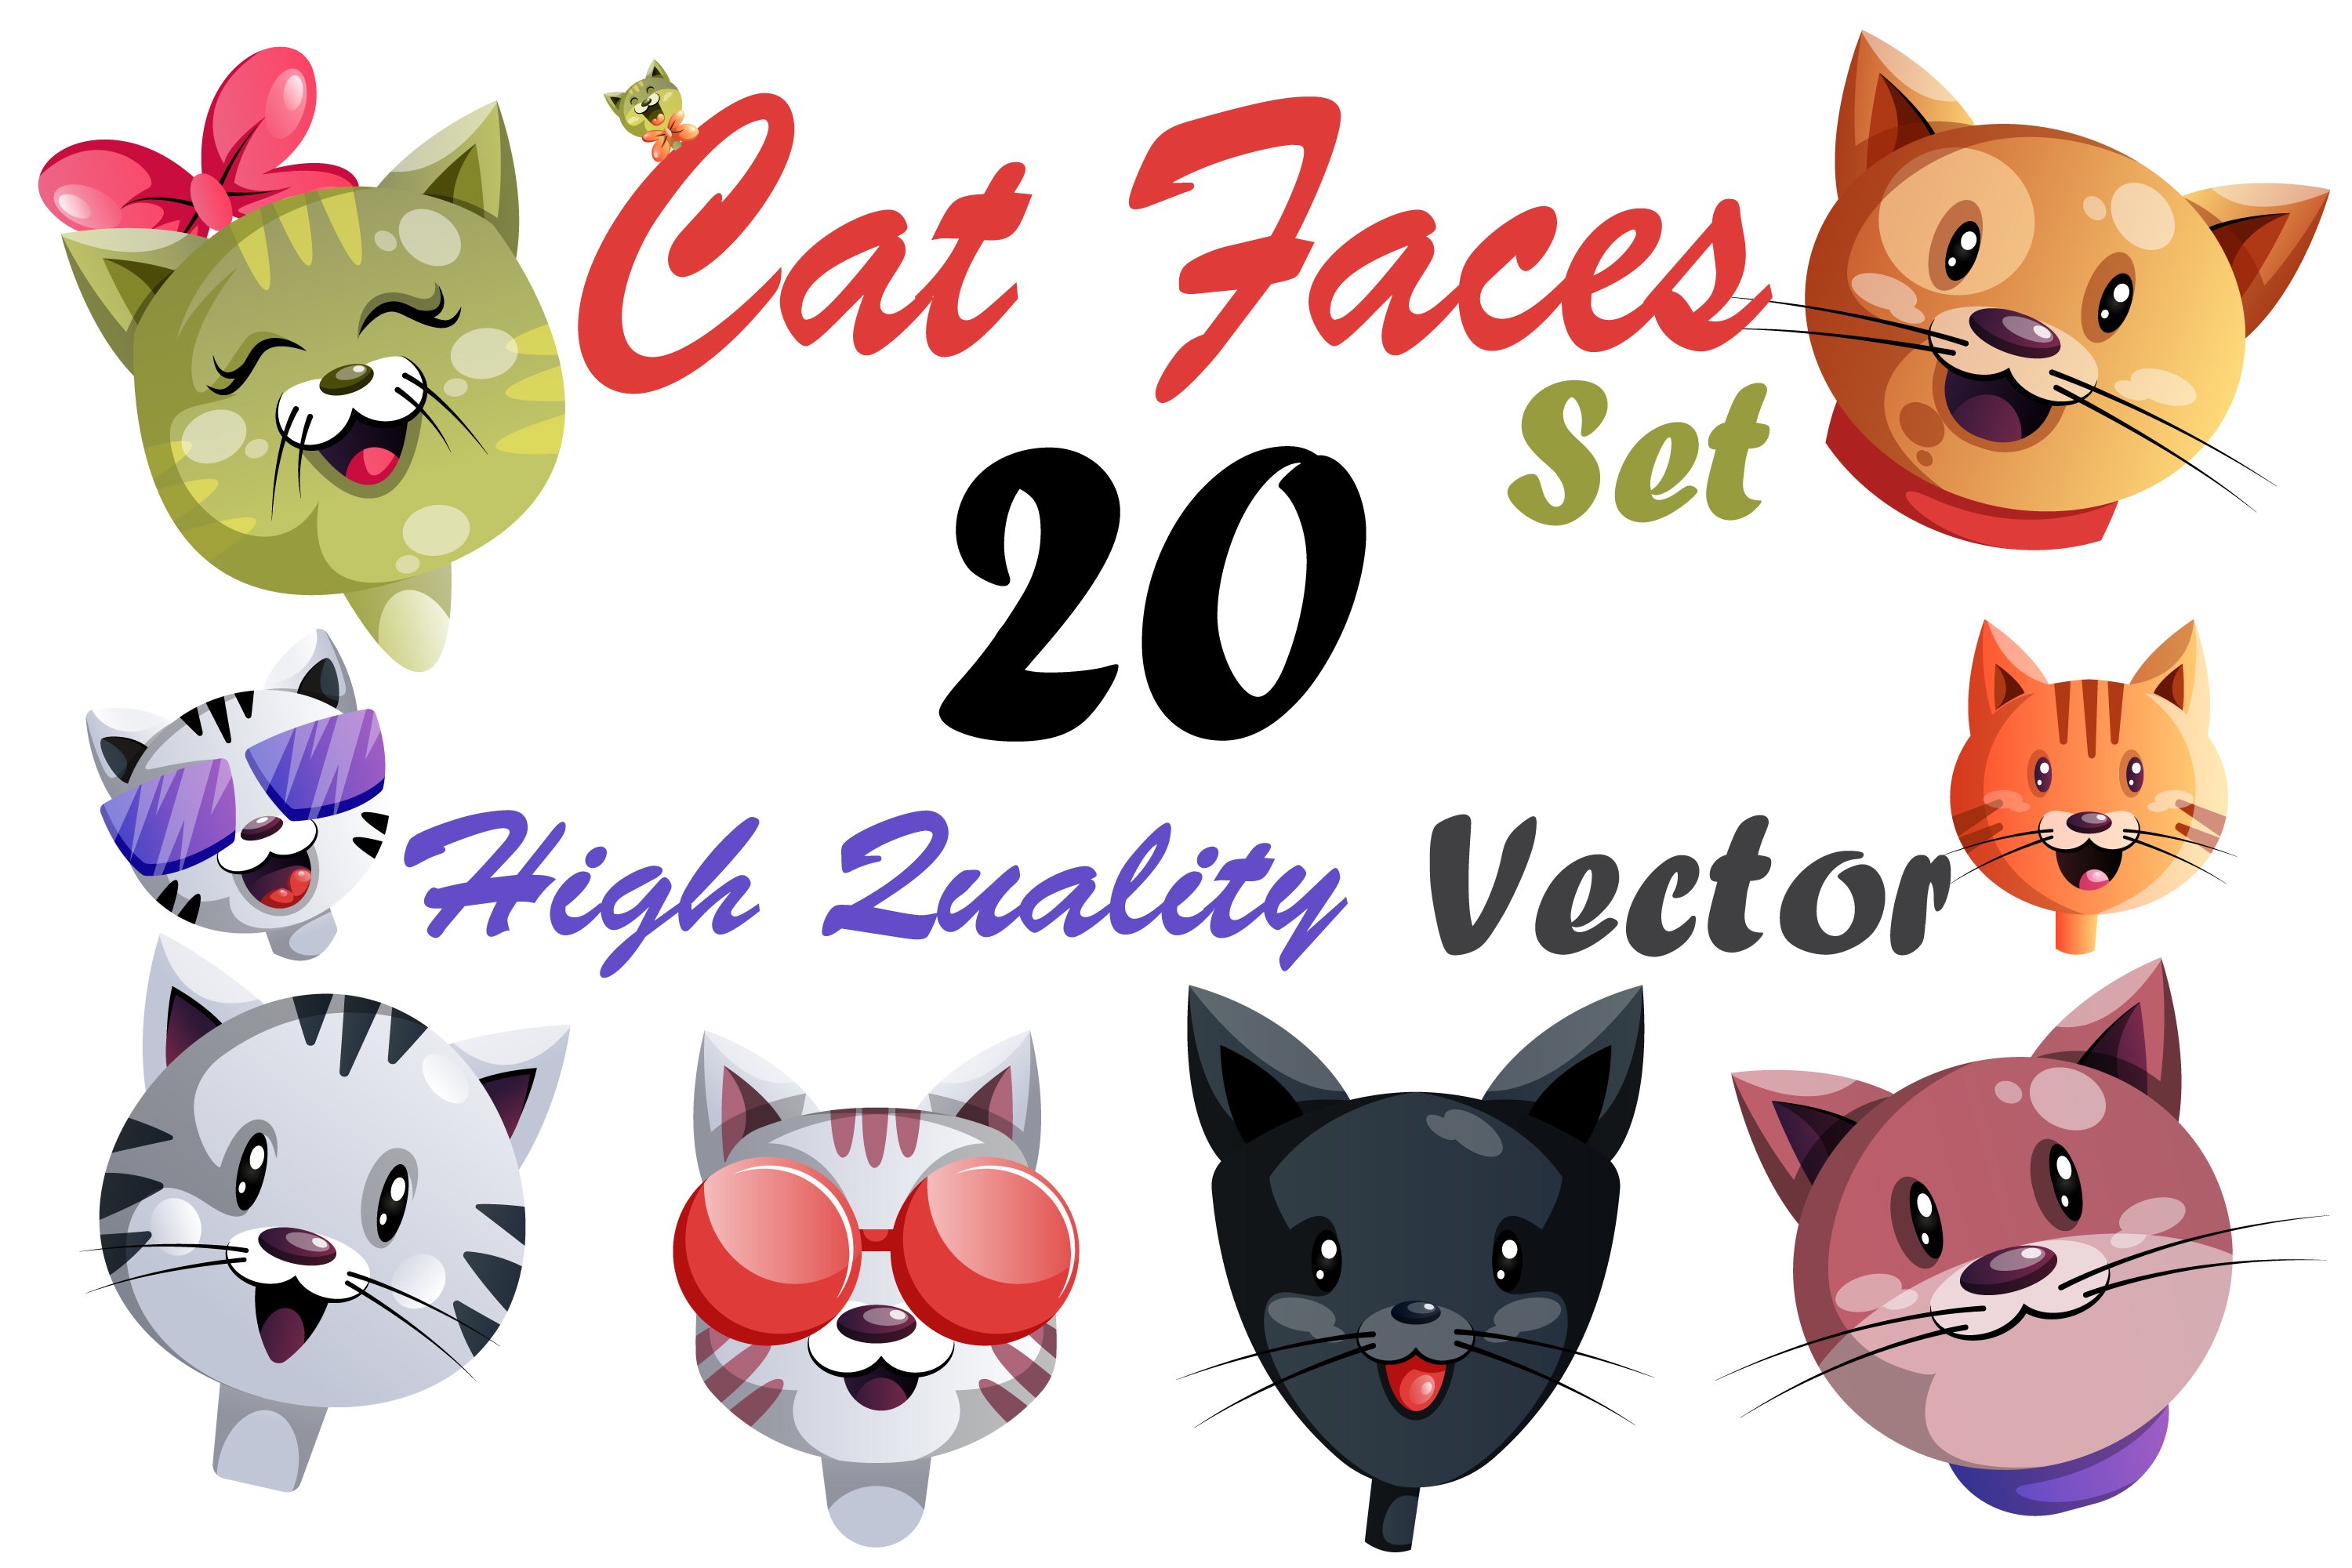 Free Vectors  Cat face icon set